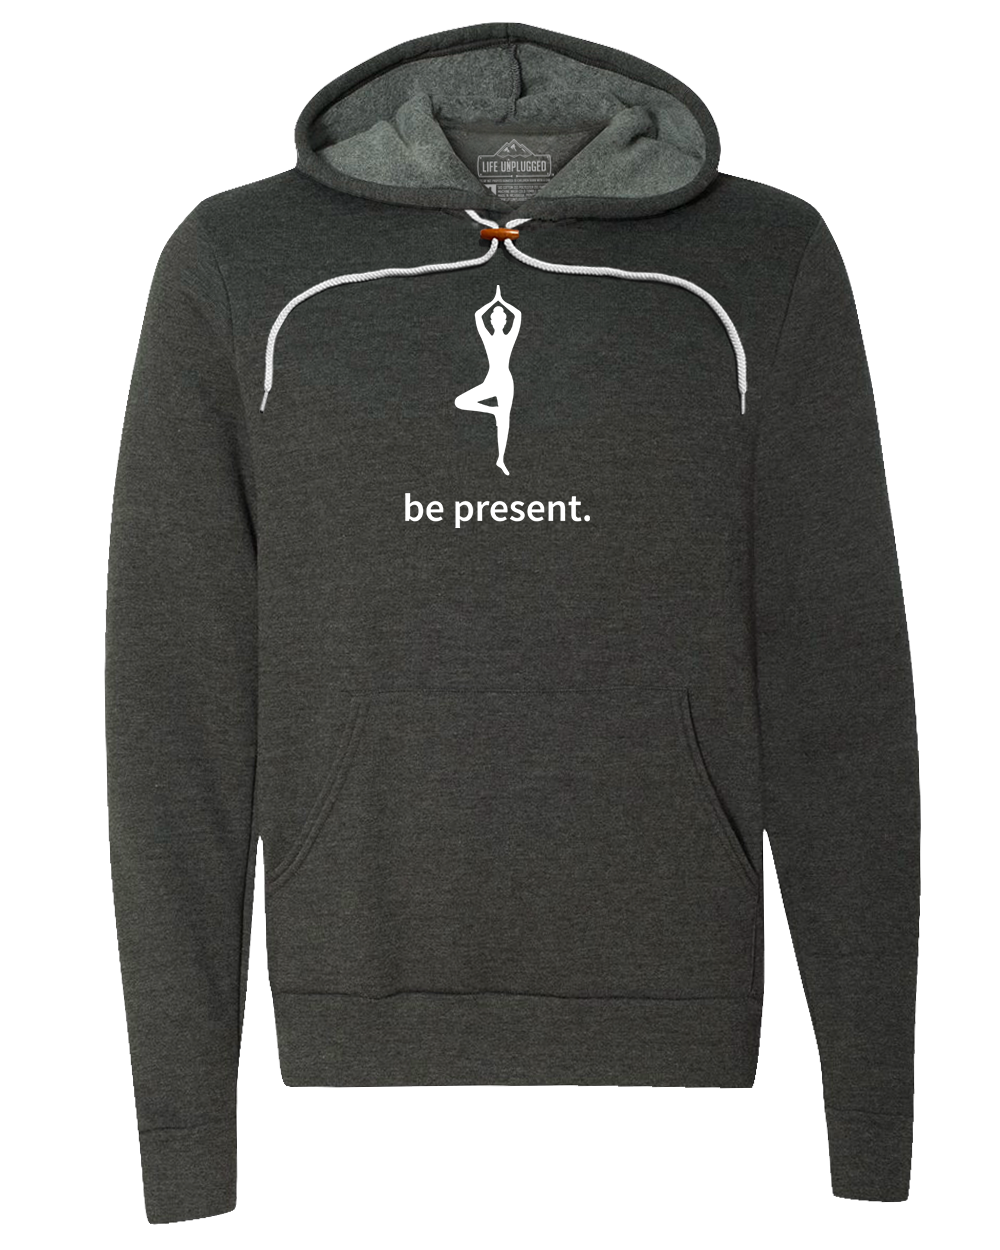 Yoga Premium Super Soft Hooded Sweatshirt - Life Unplugged